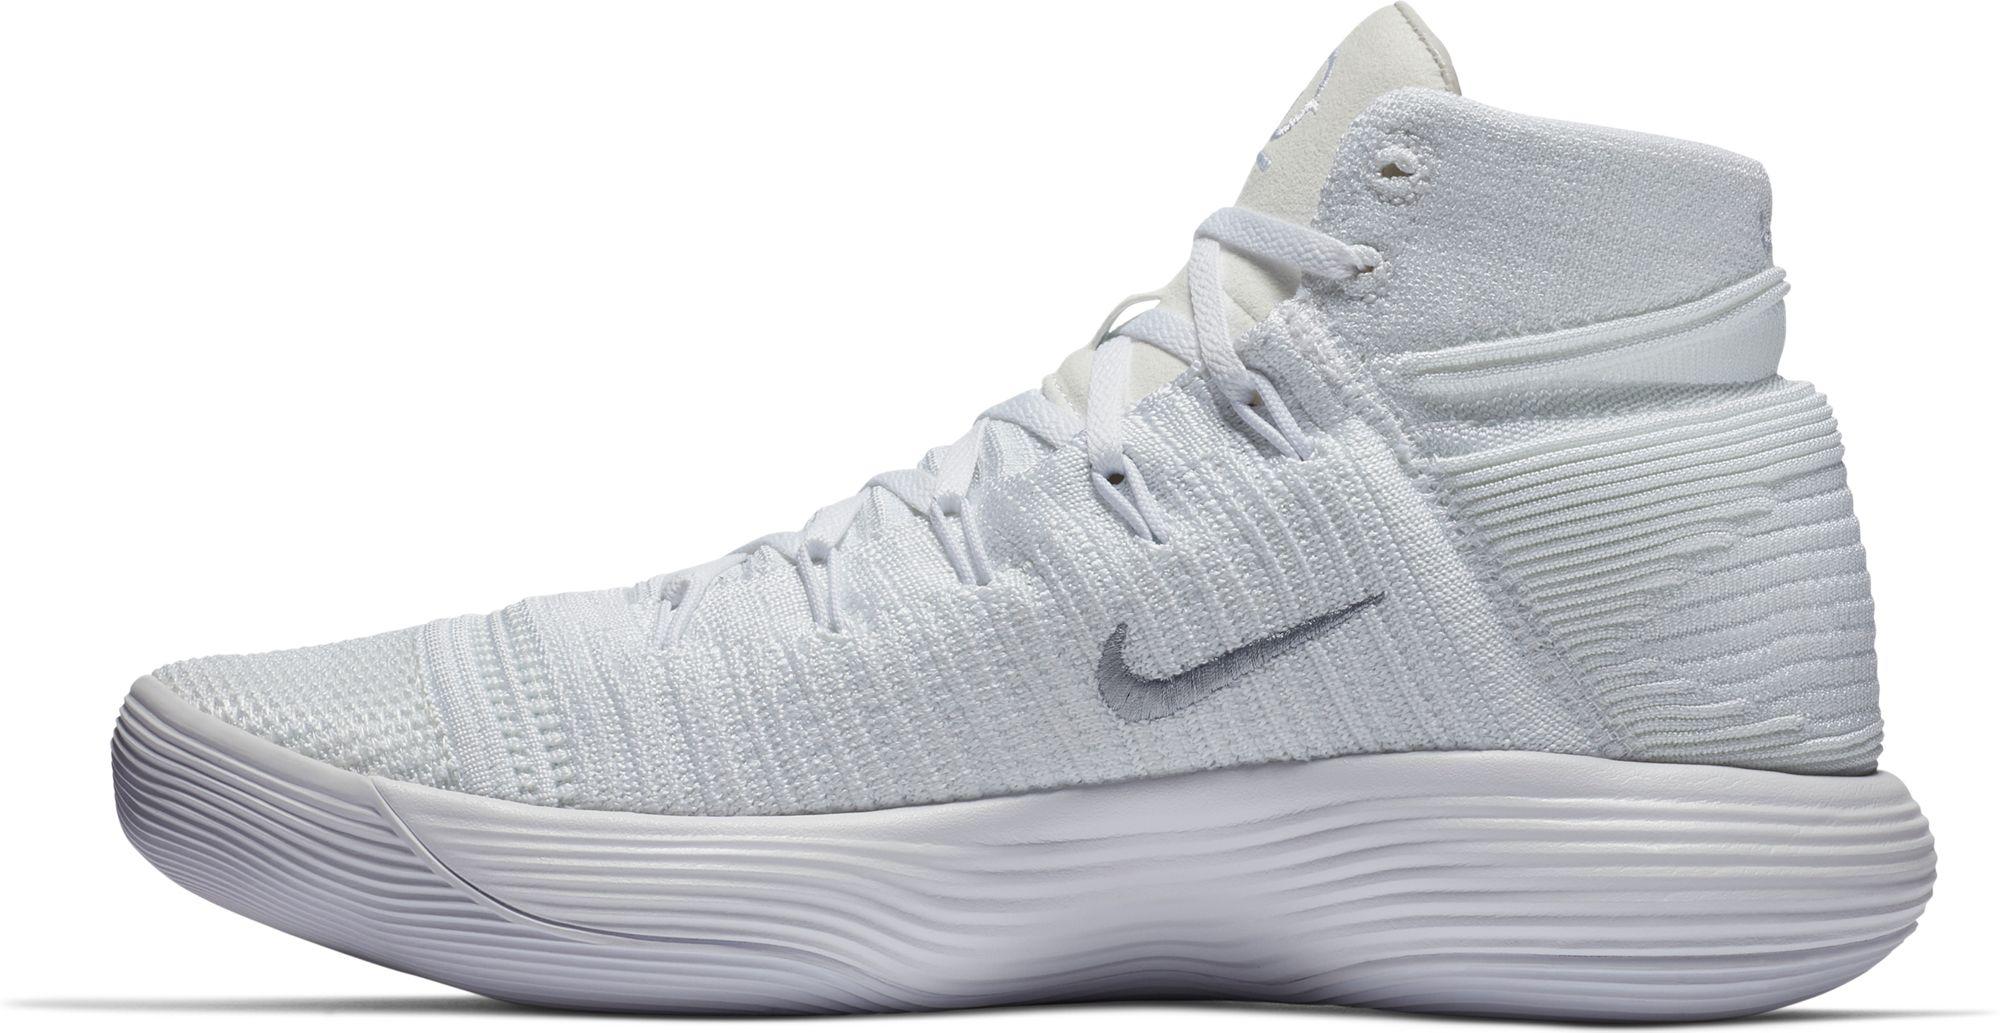 Nike React Hyperdunk 2017 Flyknit Basketball Shoes in White/Silver ...